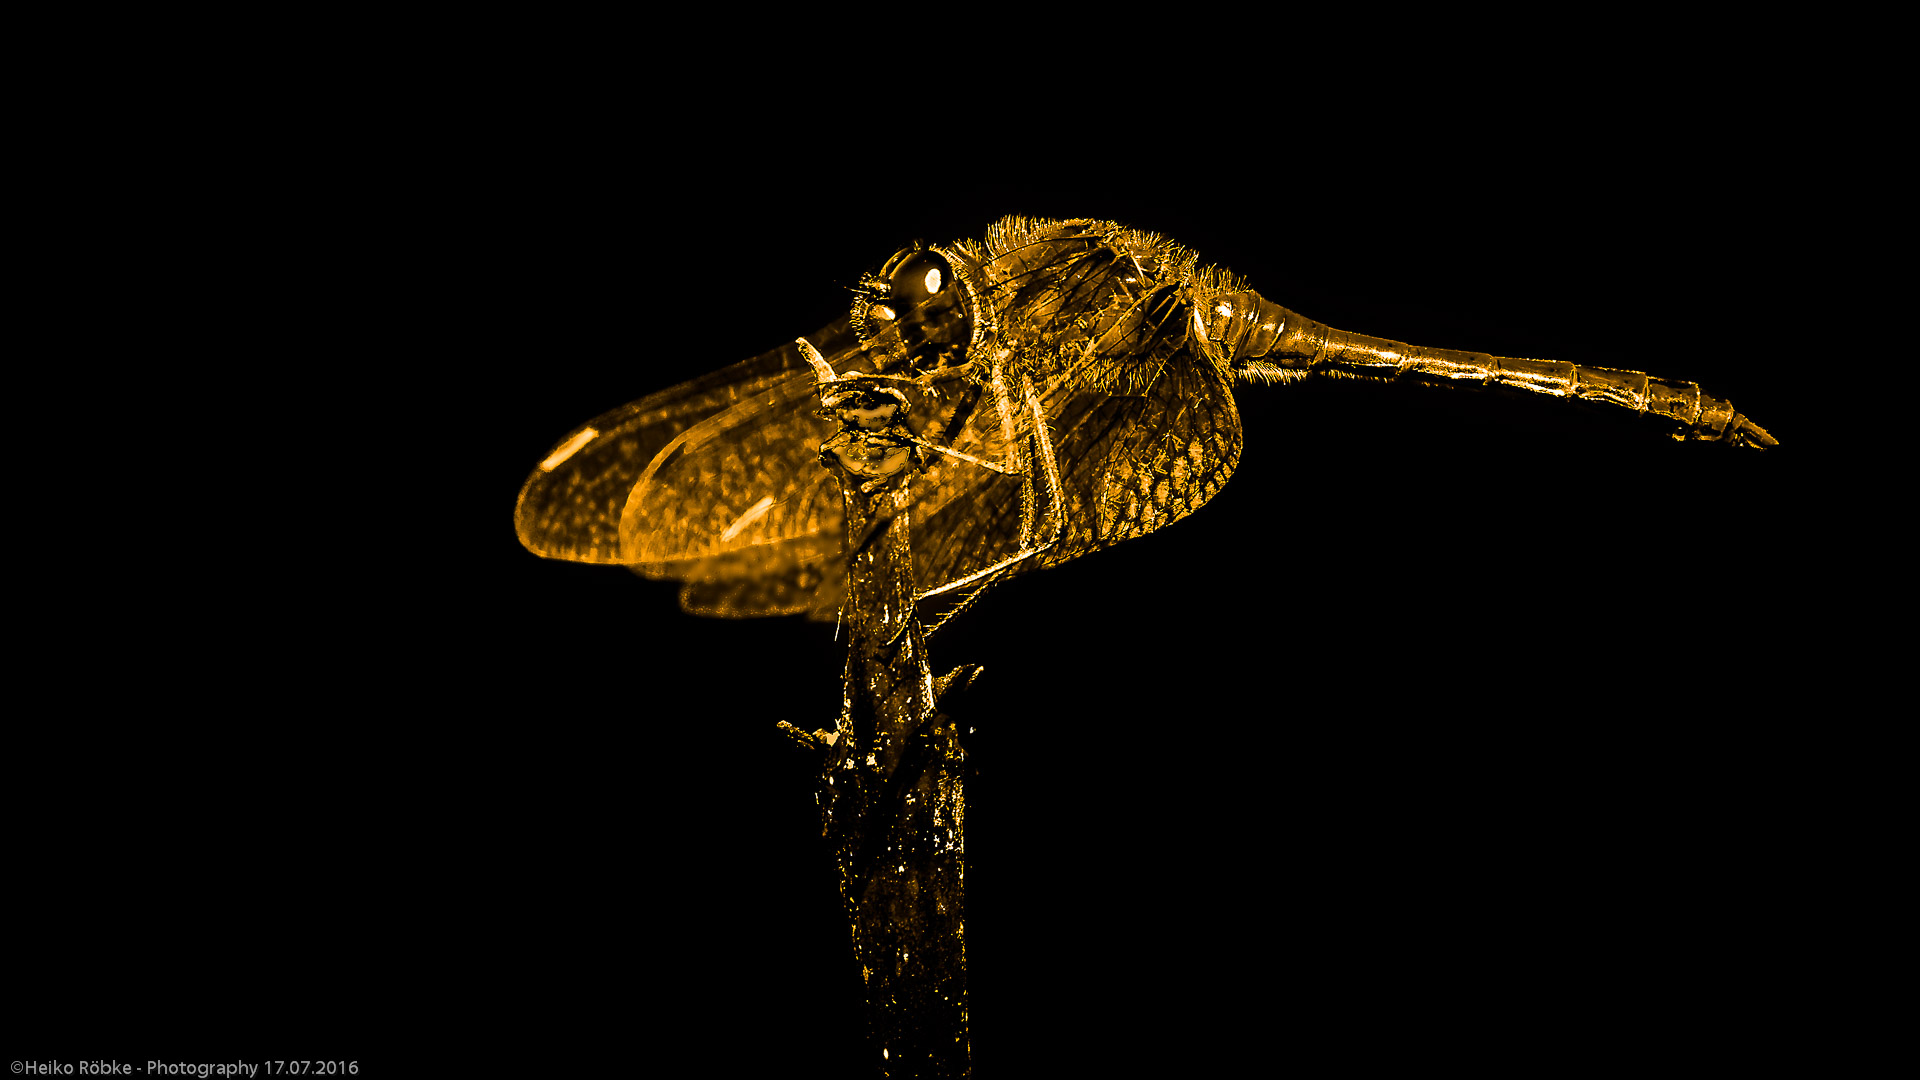 Frühe Heidelibelle (Sympetrum fonscolombii)